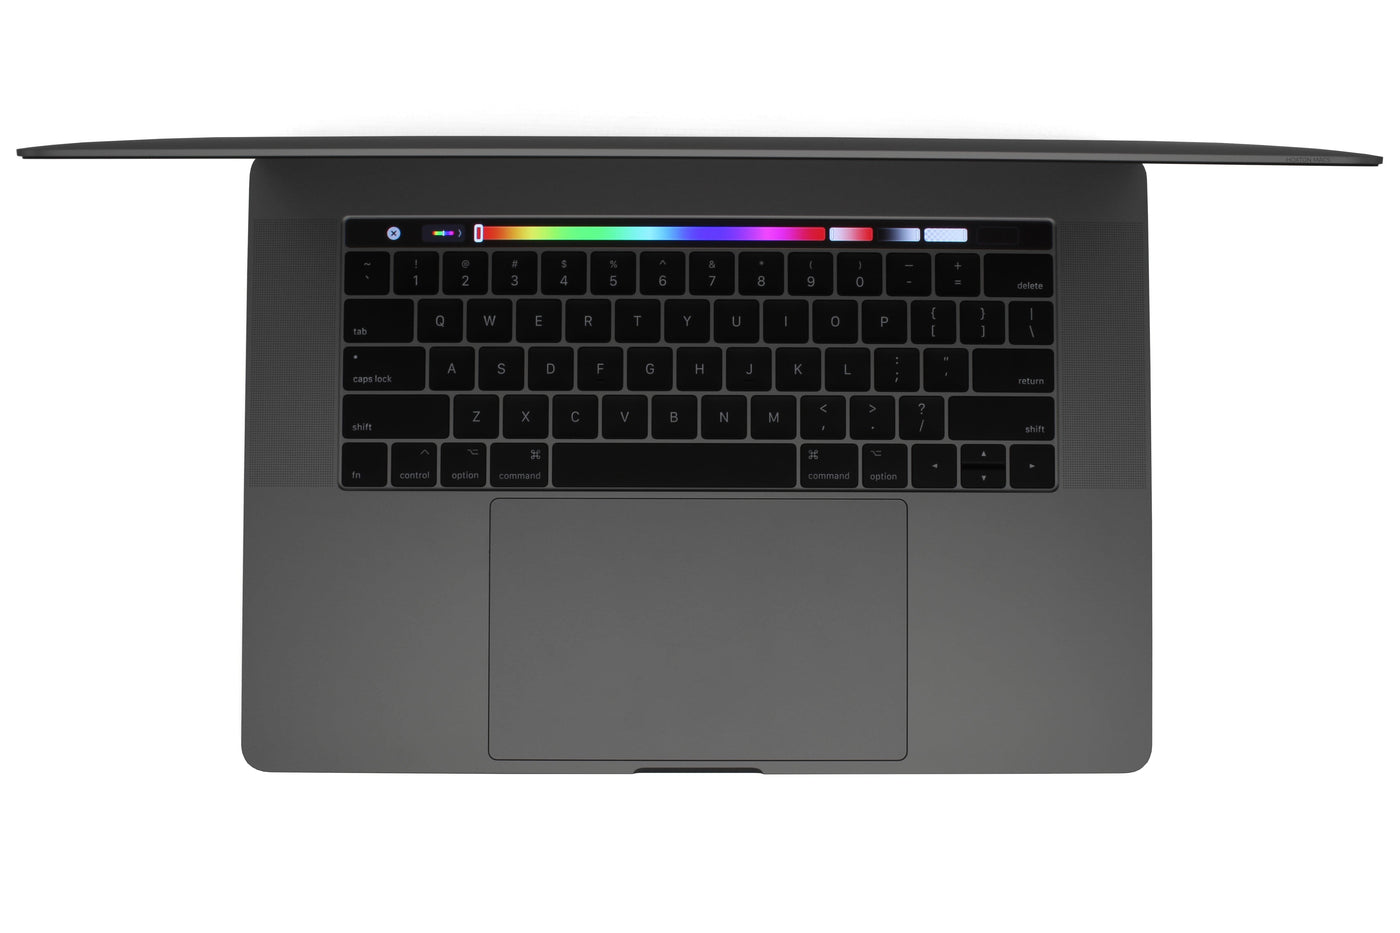 Apple MacBook Pro 15-inch MacBook Pro 15-inch Core i9 2.9GHz (Space Grey, Mid 2018) - Good